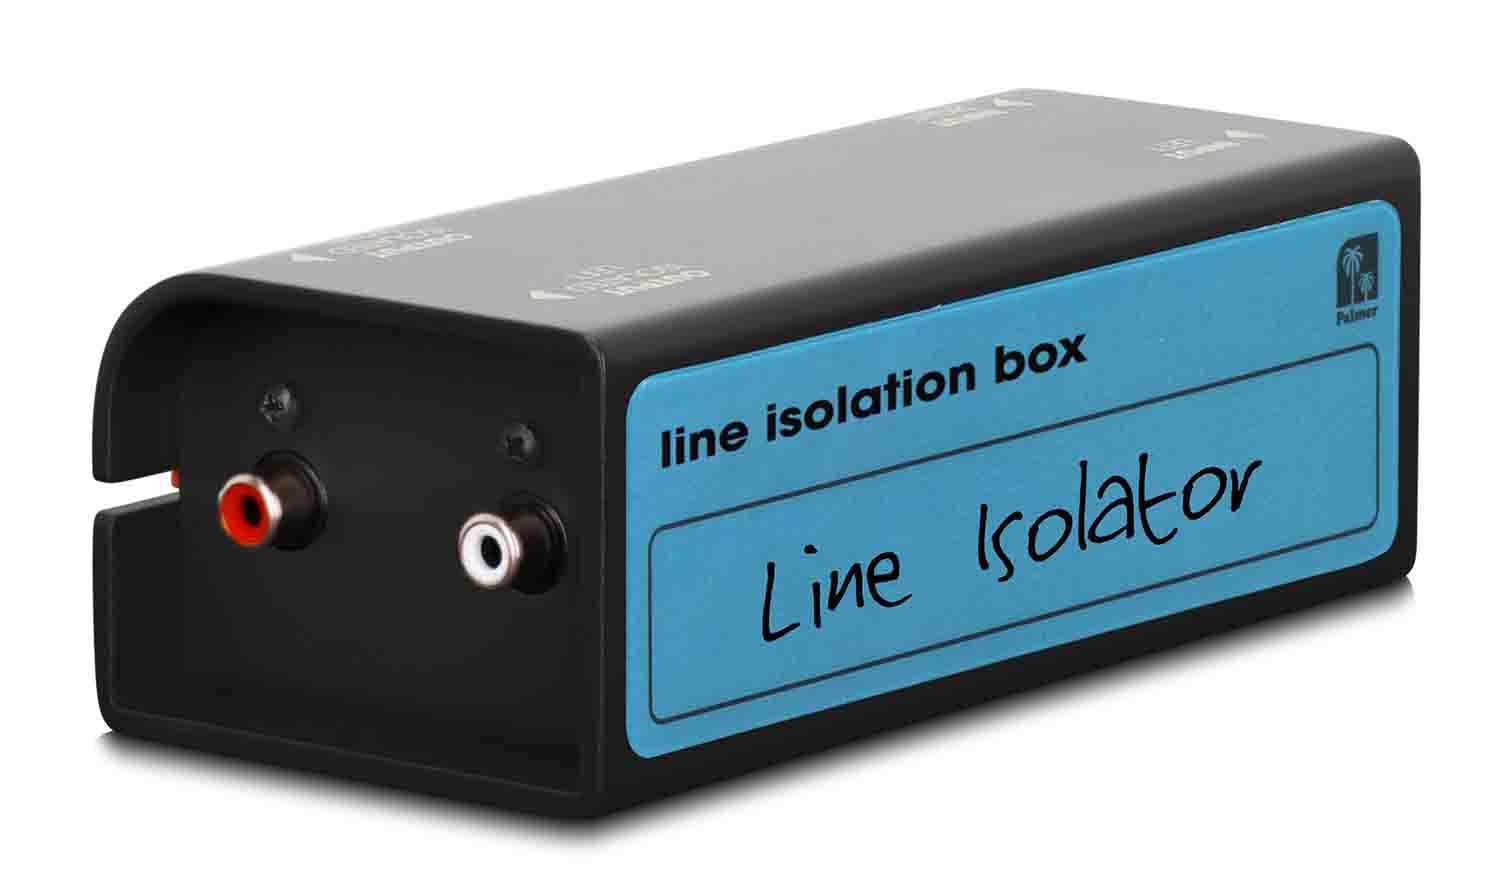 B-Stock: Palmer enz Two Channel Unbalanced Line Isolation Box - Hollywood DJ